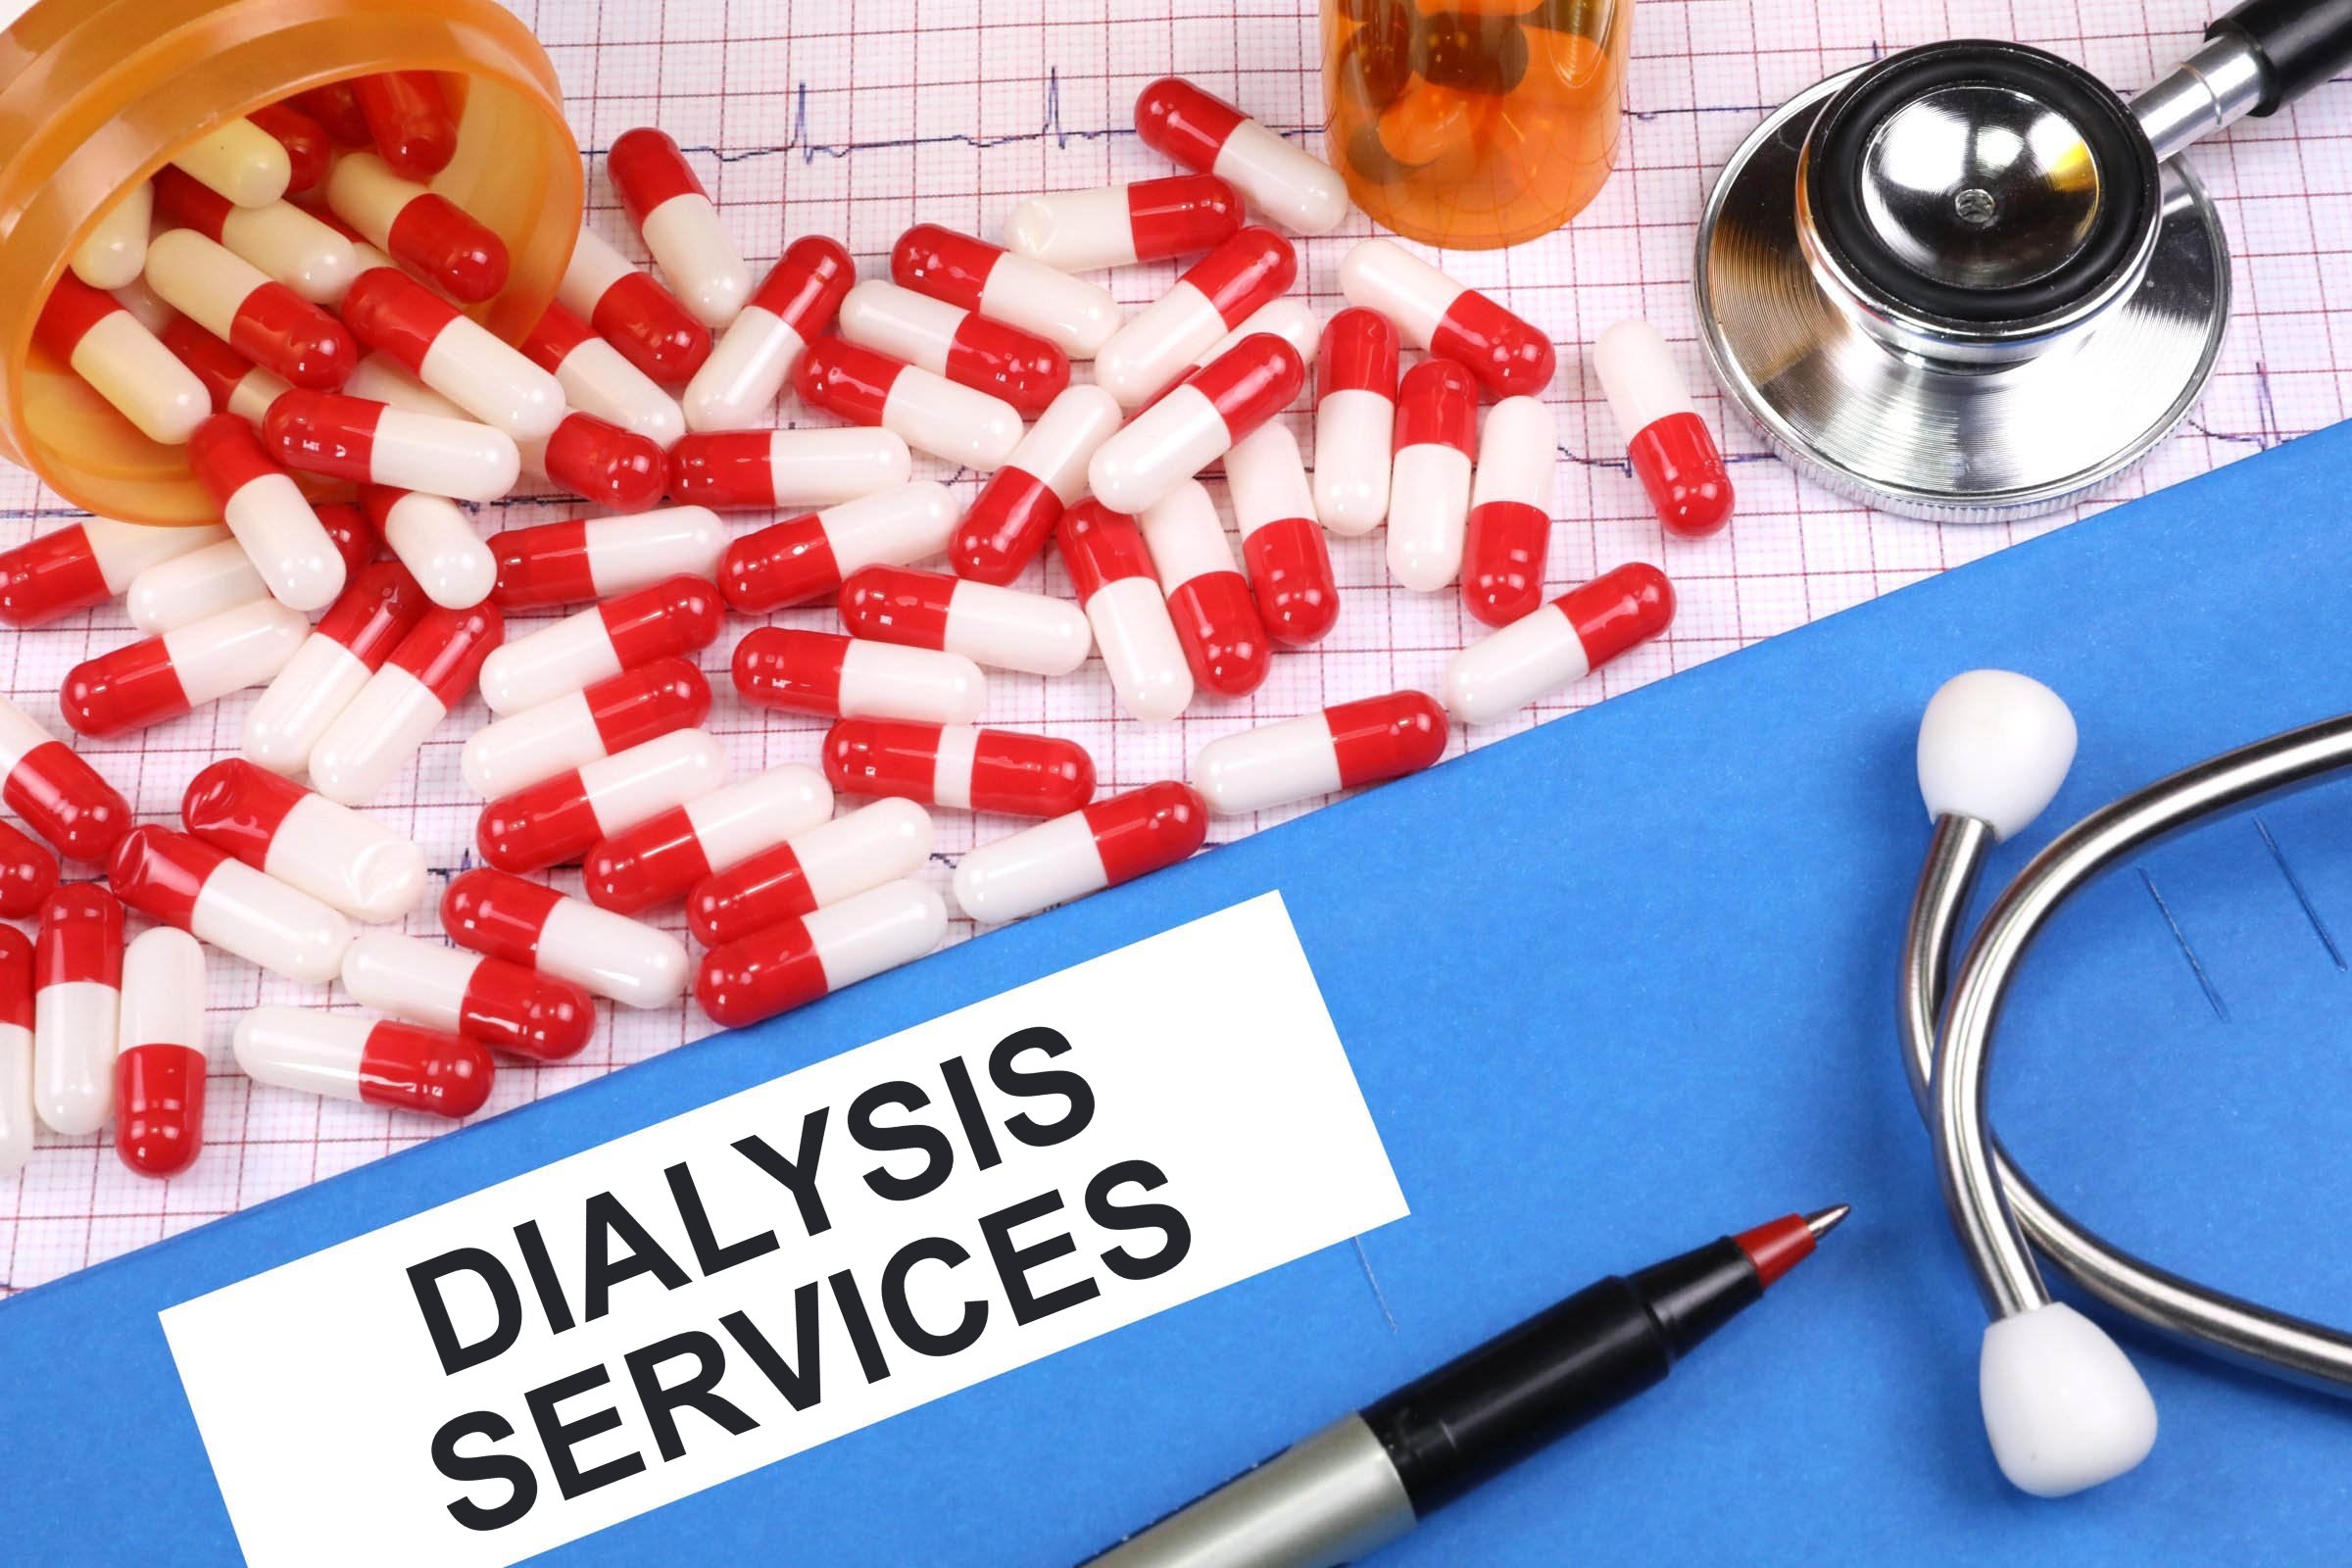 dialysis services